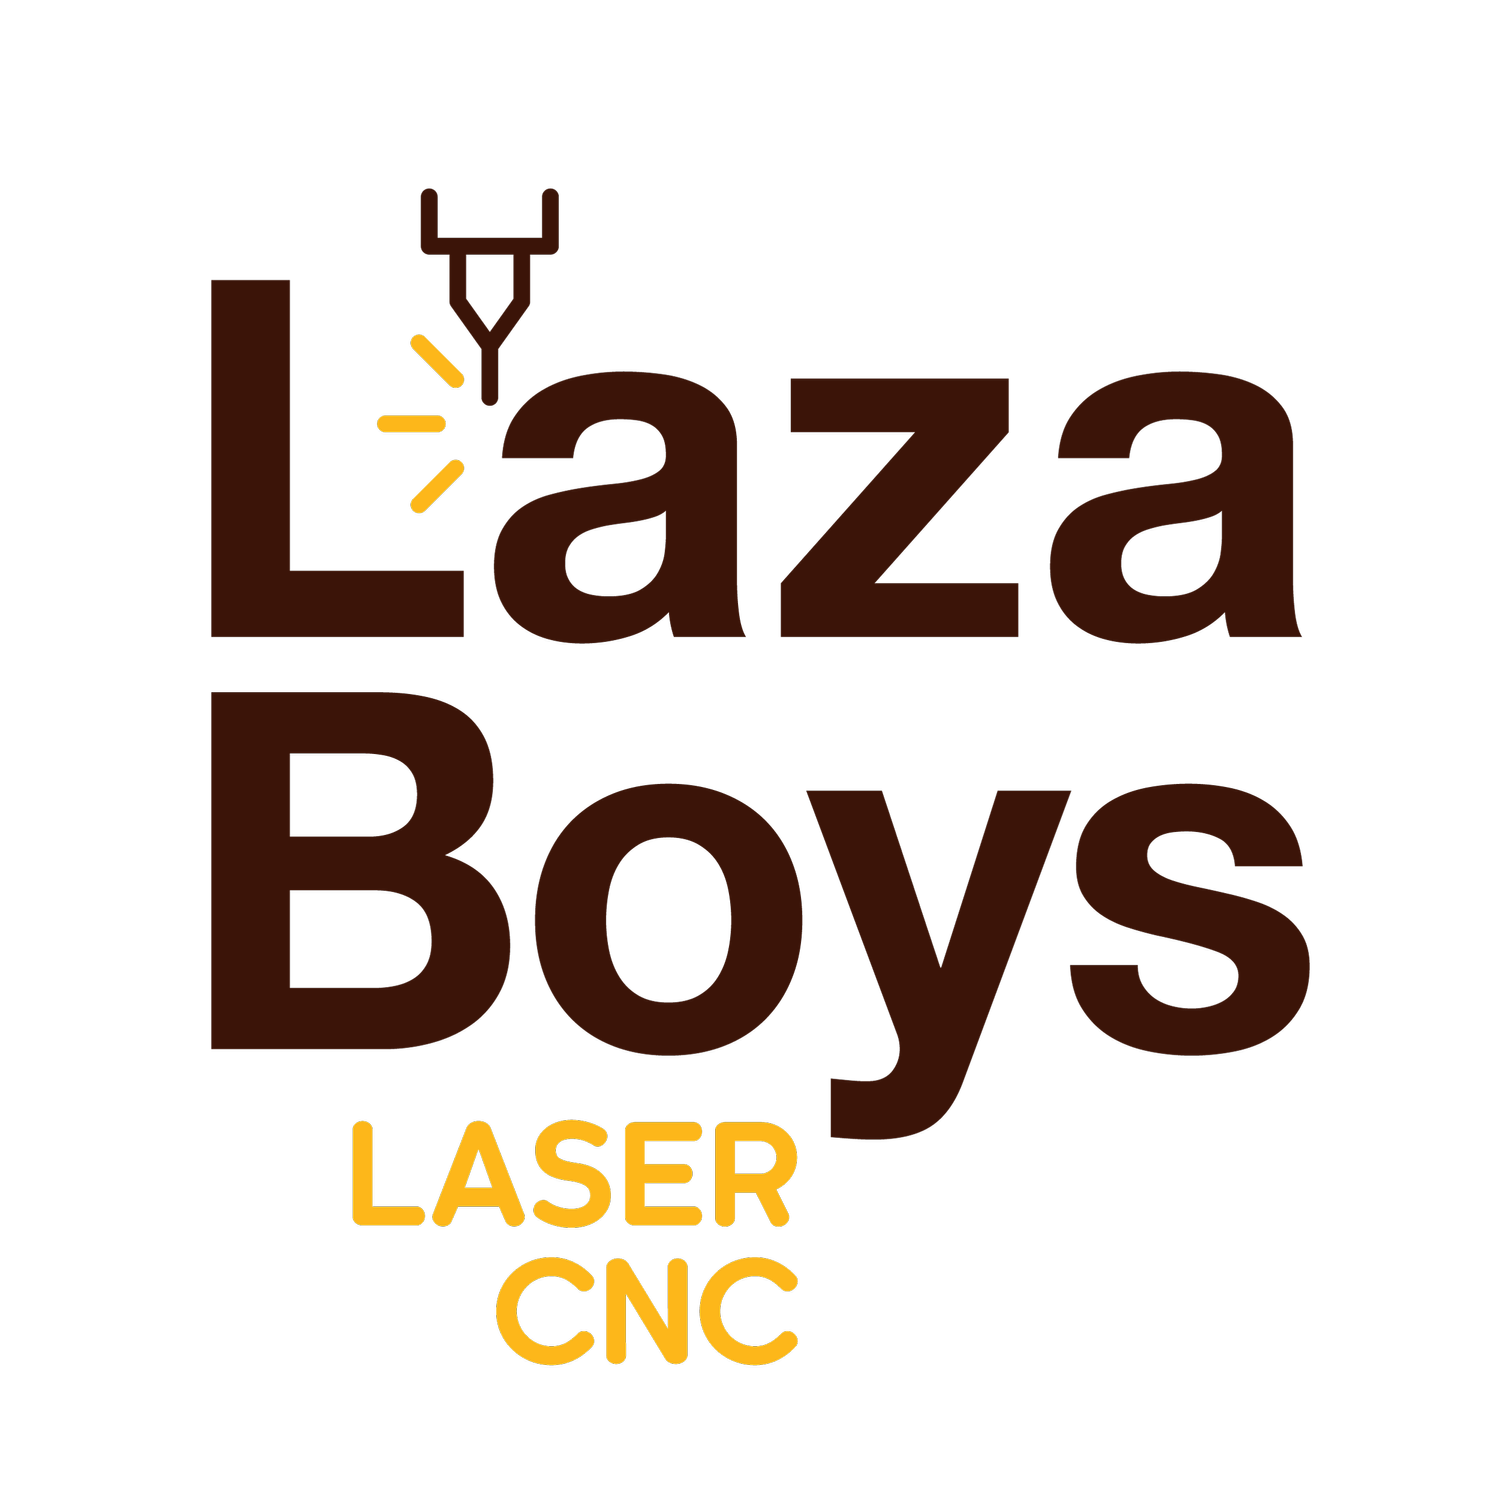 LazaBoys Laser CNC